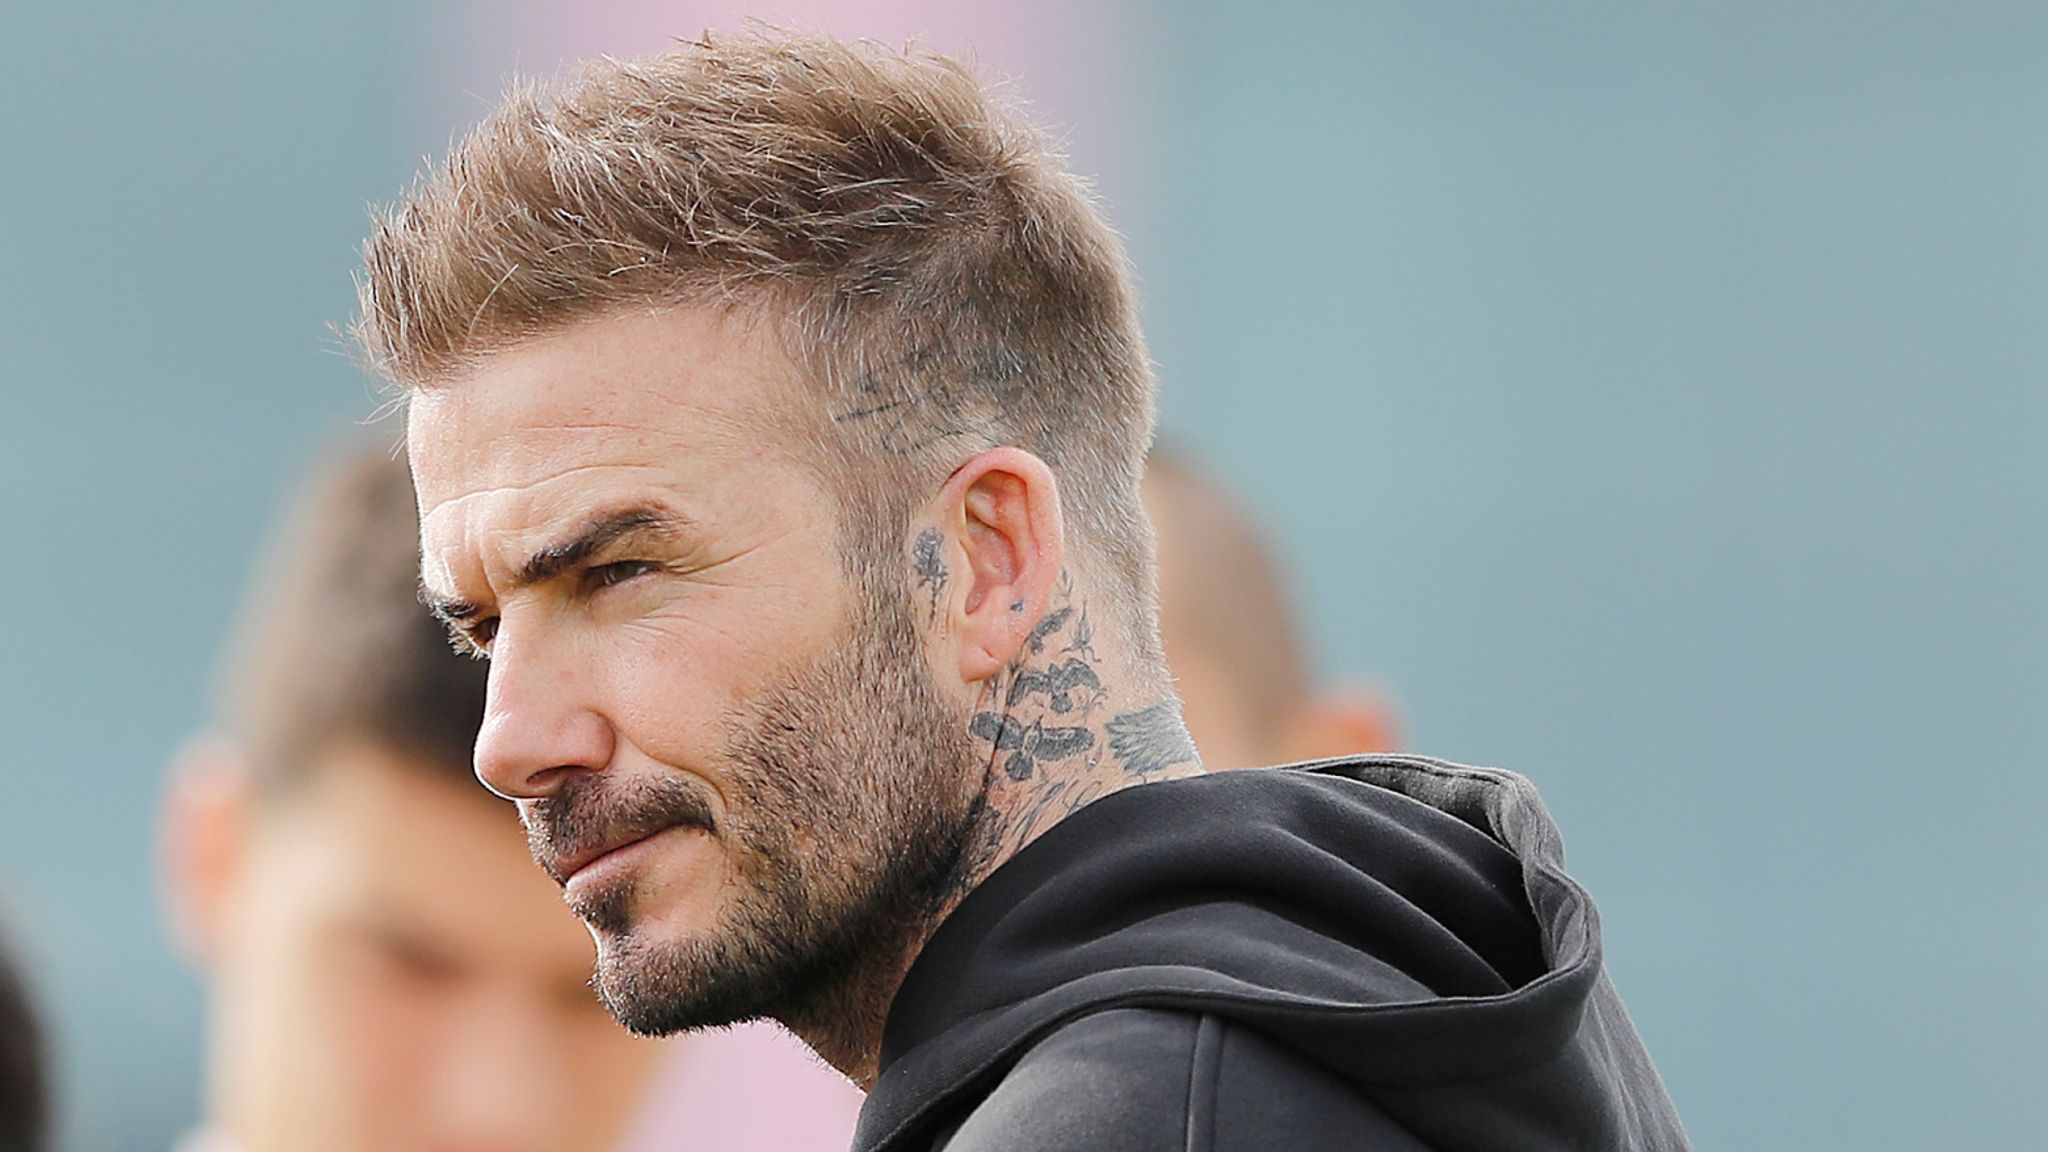 Soccer Player Profile: David Beckham